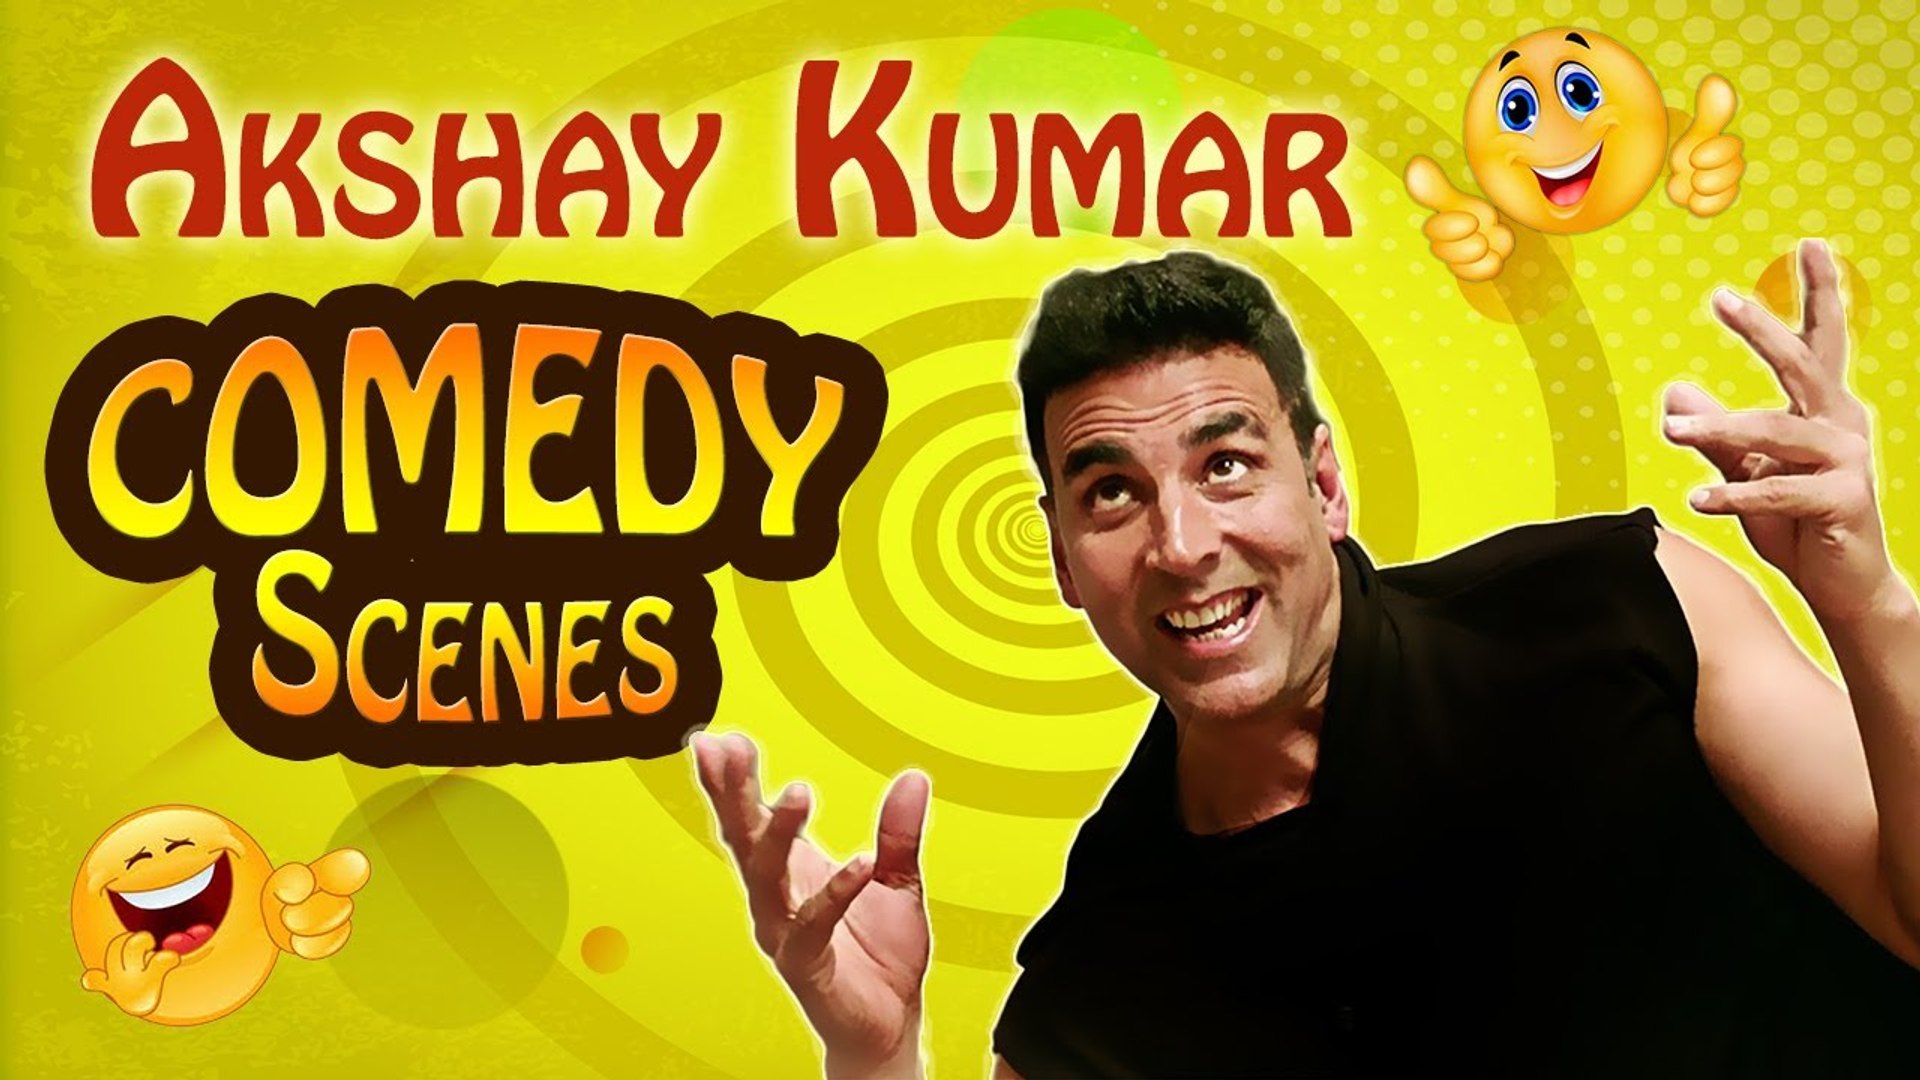 Akshay Kumar Comedy Scenes (HD) - Top Comedy Scenes - video Dailymotion